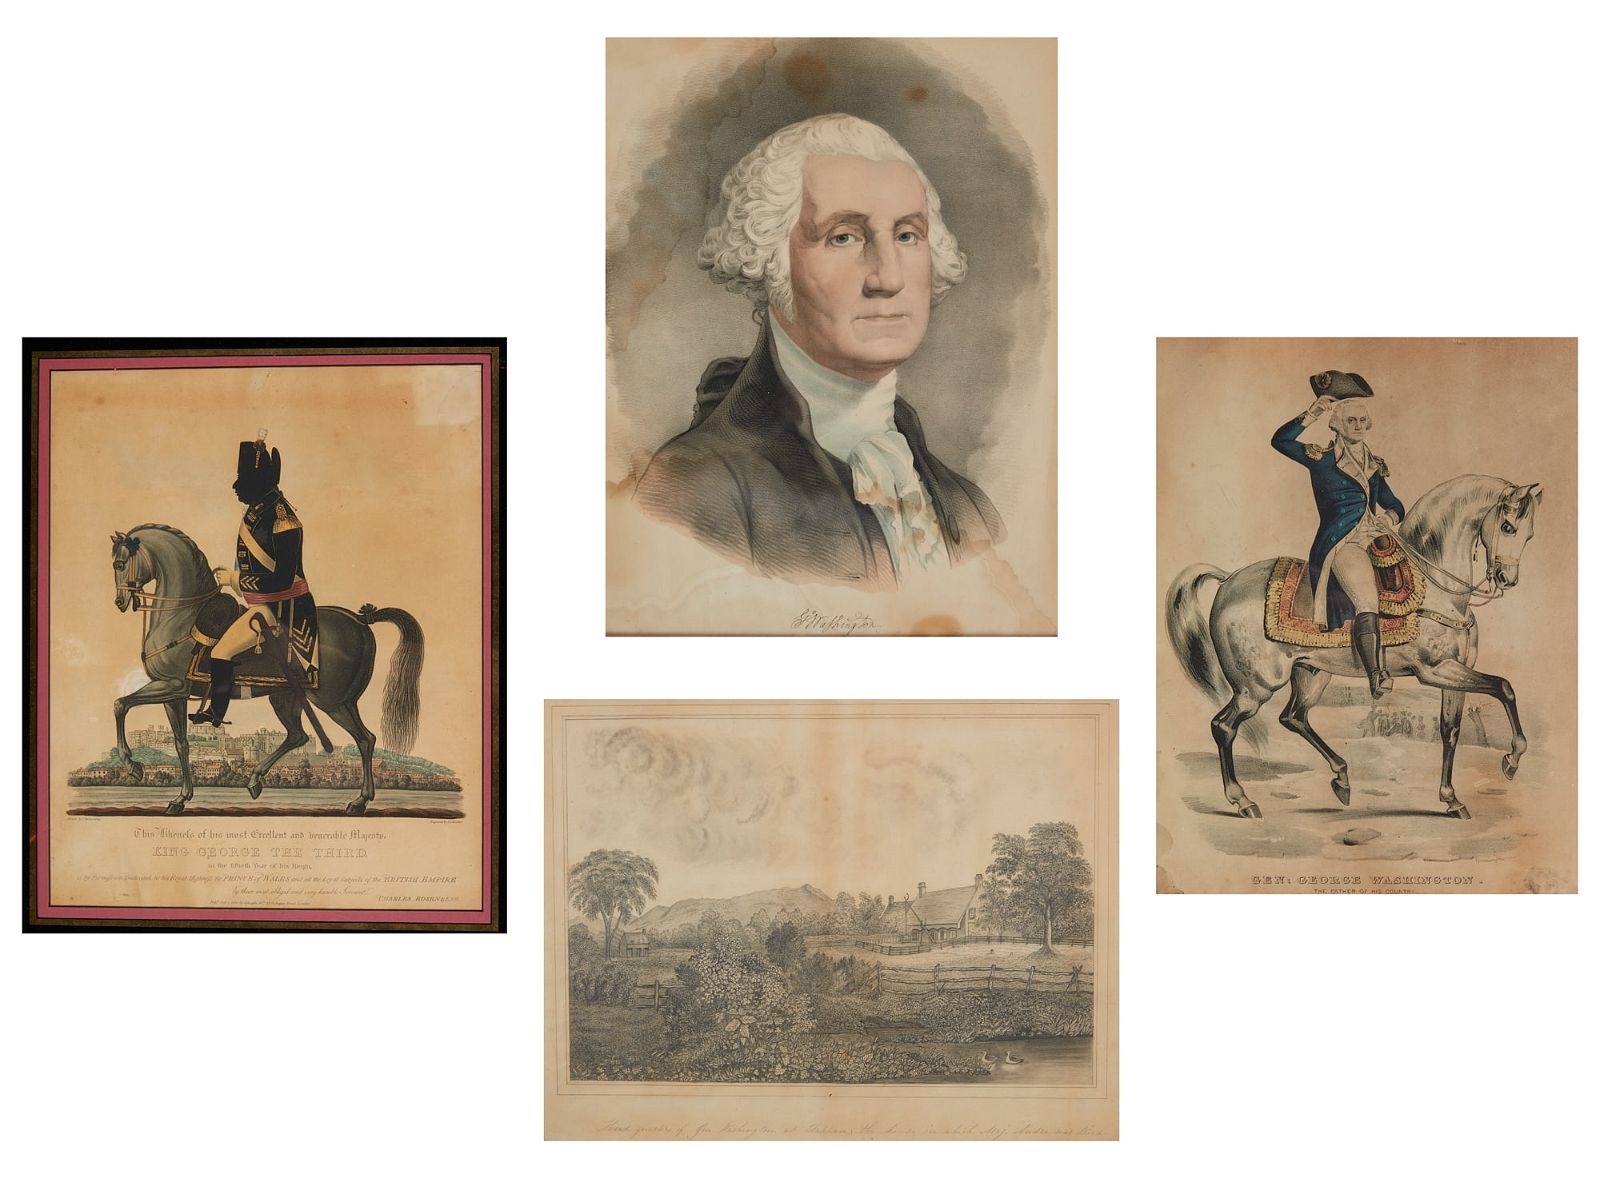 FOUR IMAGES RELATING TO WASHINGTON